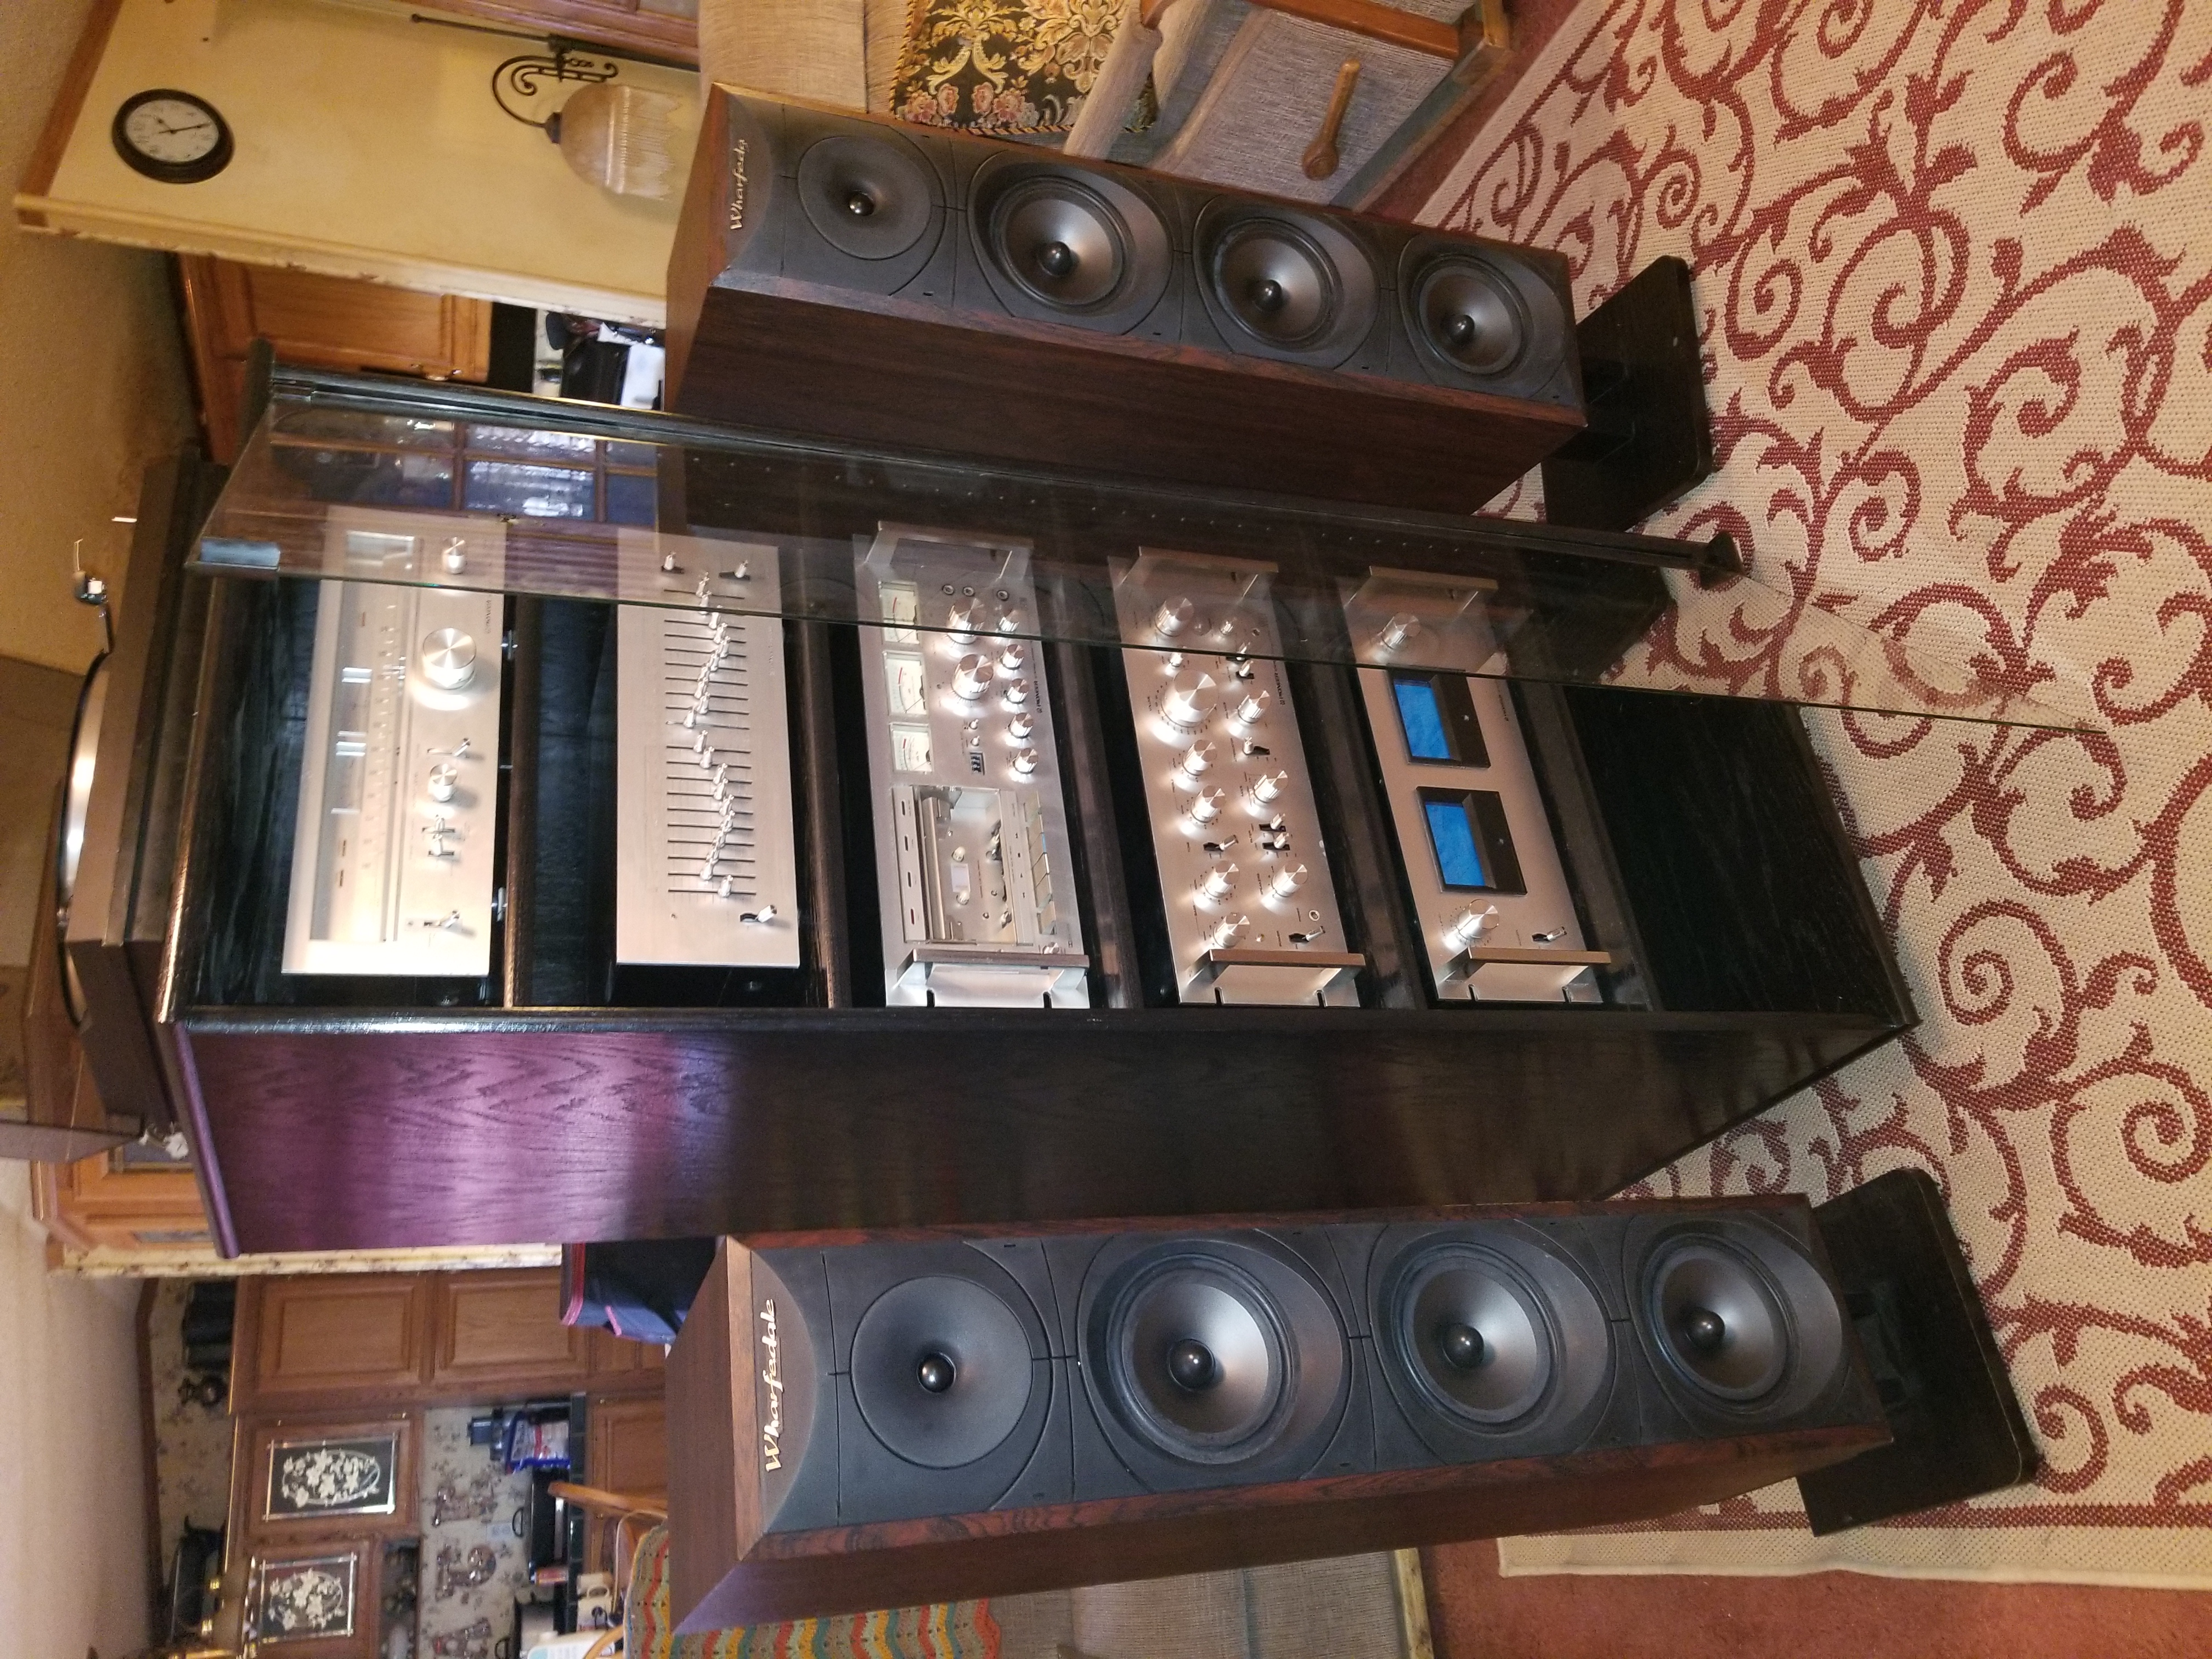 60 inch high stereo cabinet finished in Minwax True Black on oak. Looks great!